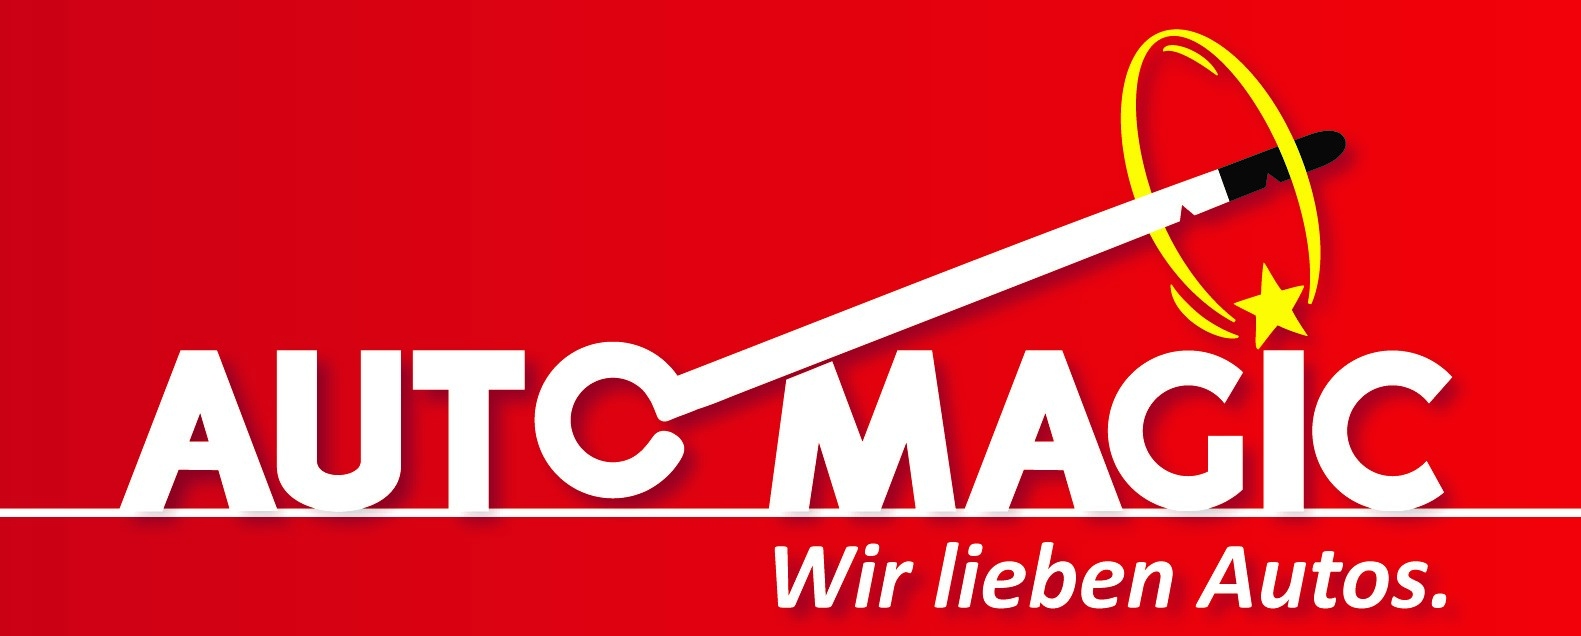 AutoMagic Logo - Referenzen